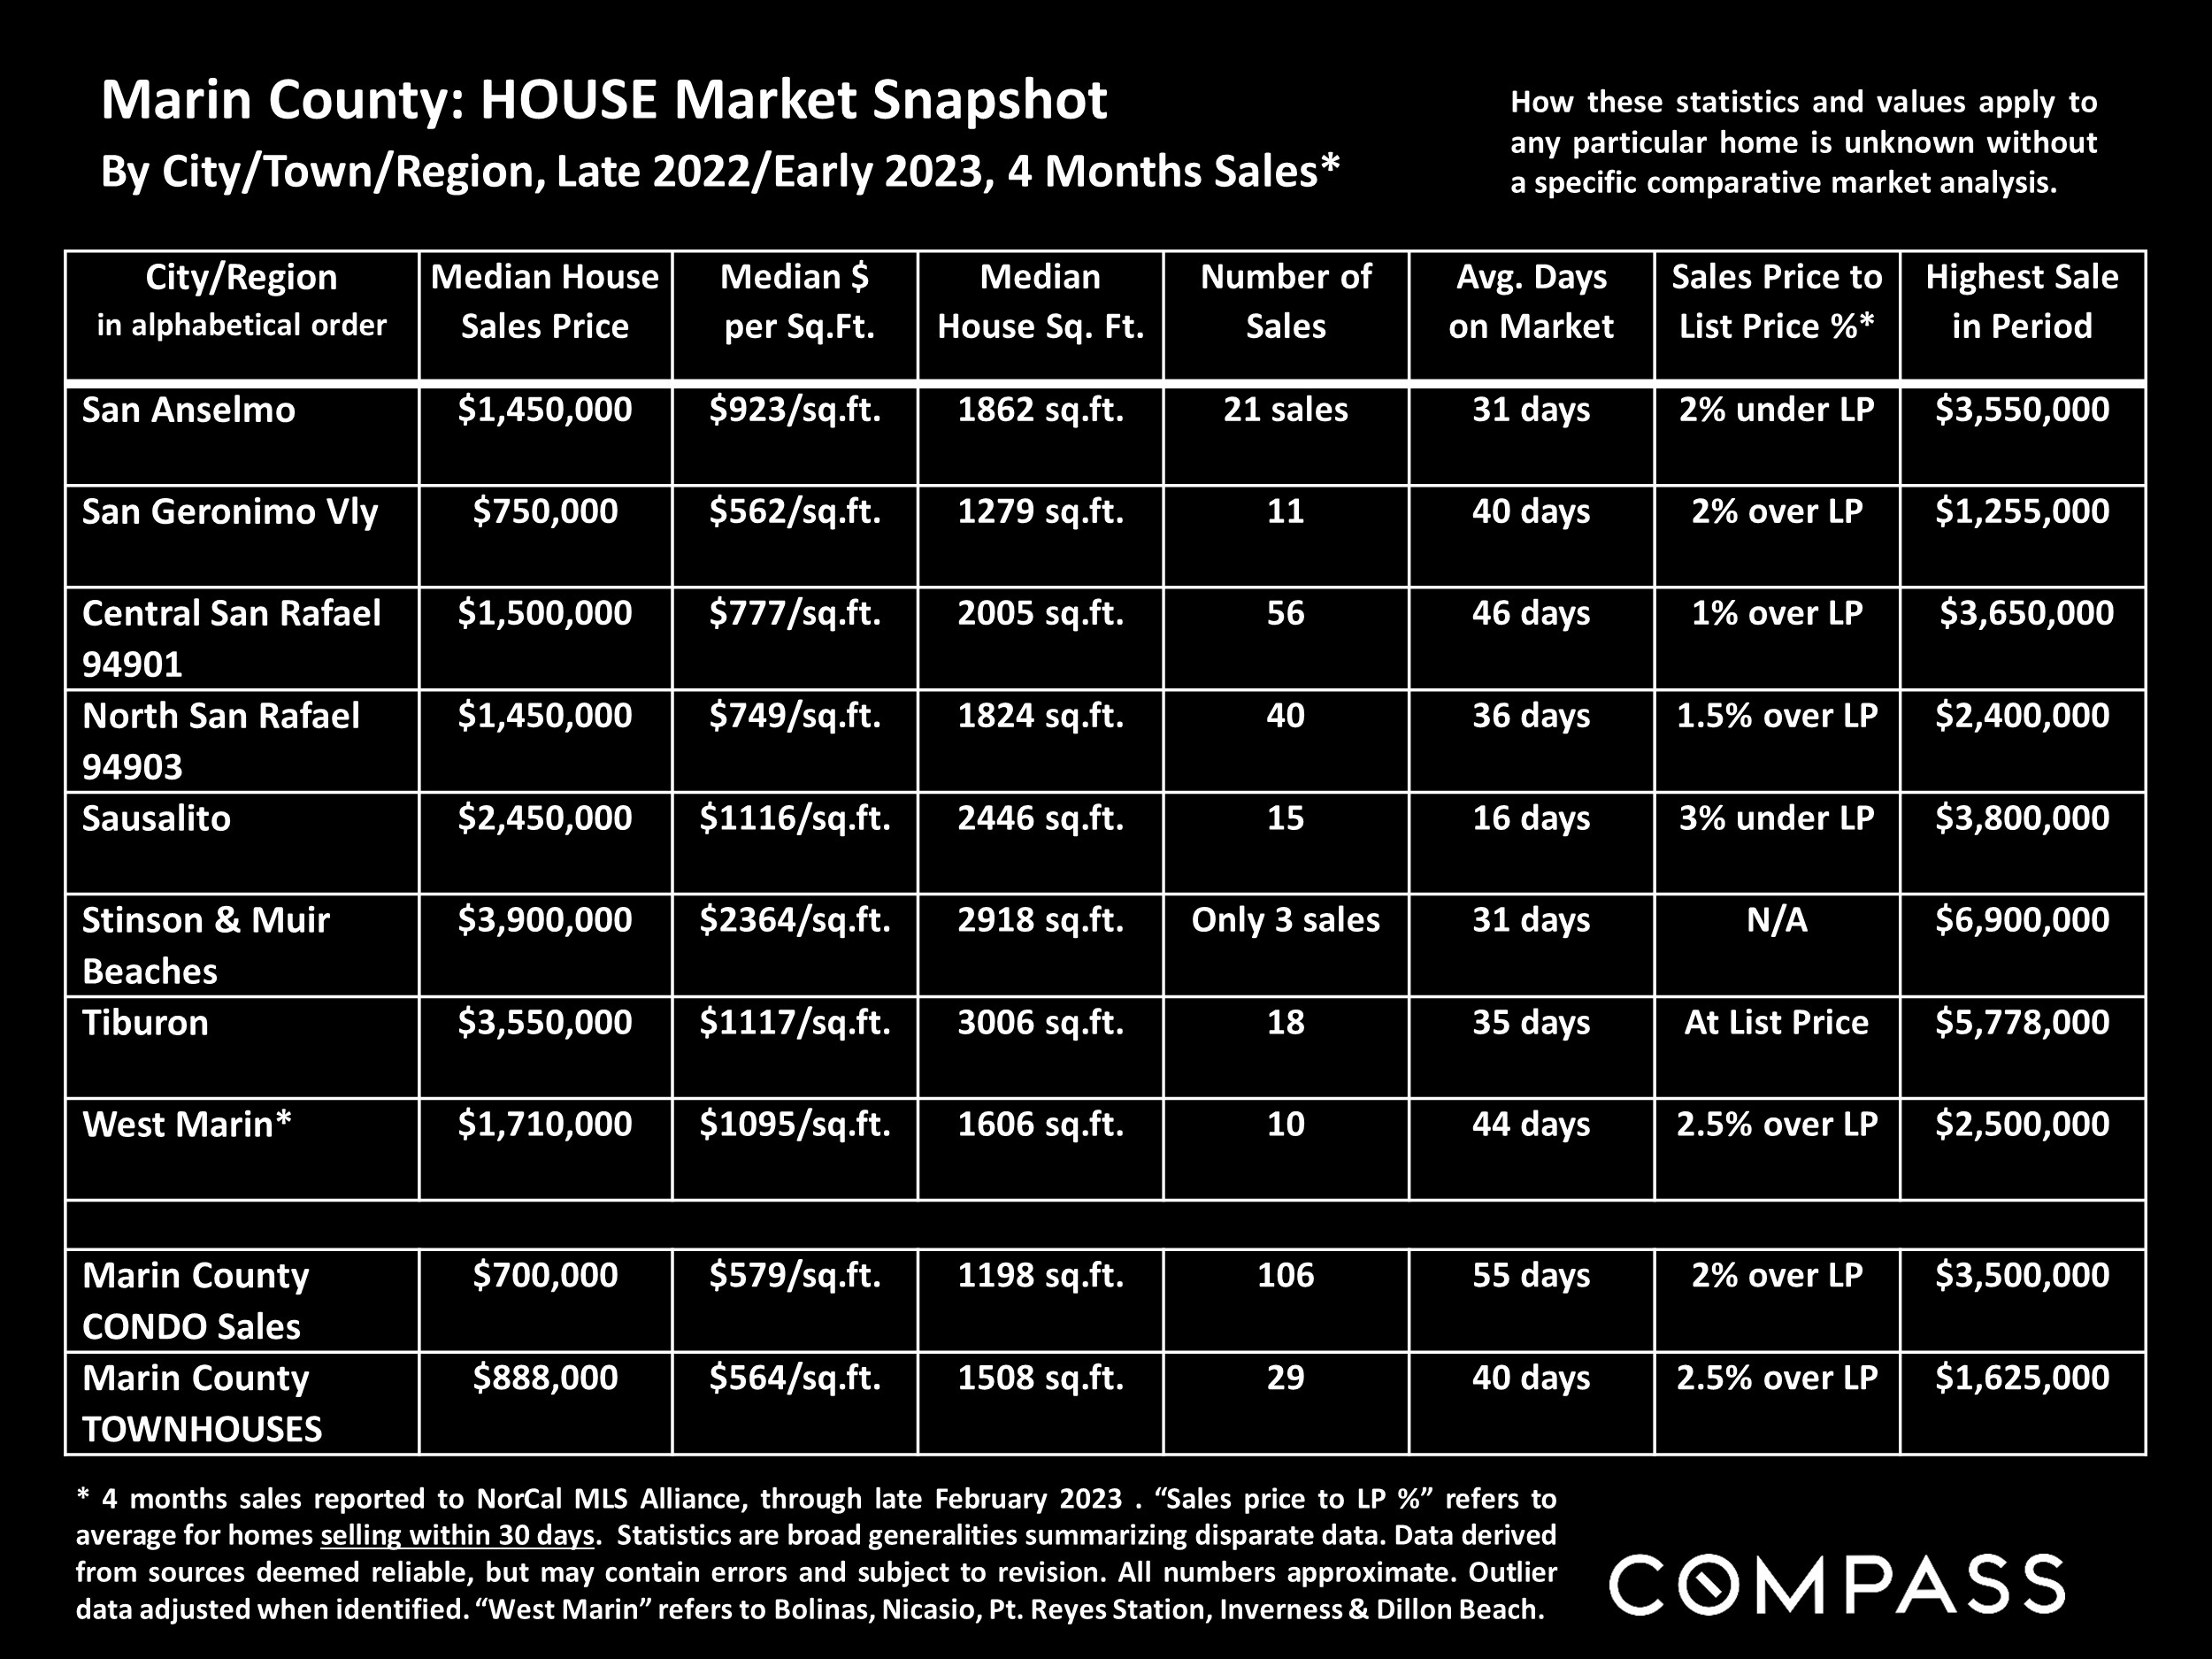 Marin County: HOUSE Market Snapshot